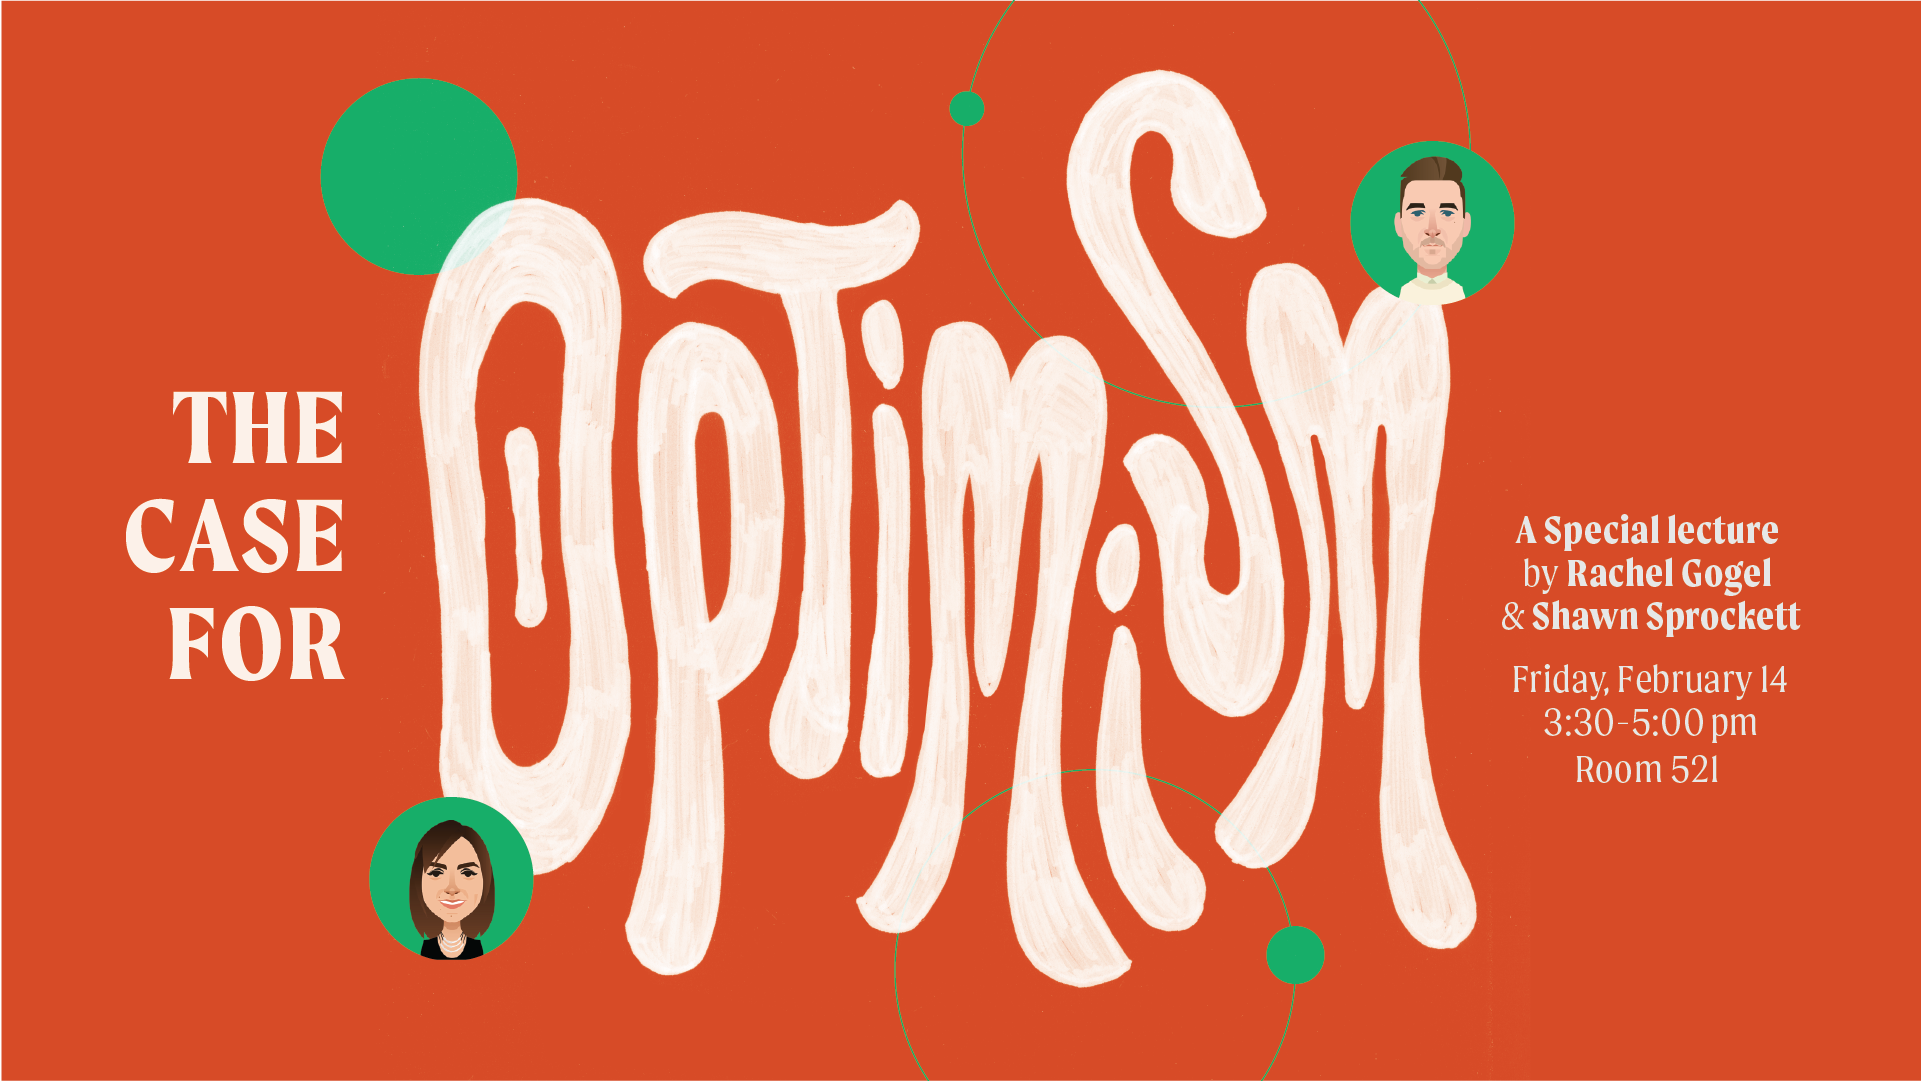 Optimism lecture announcement; design by Bill Chien